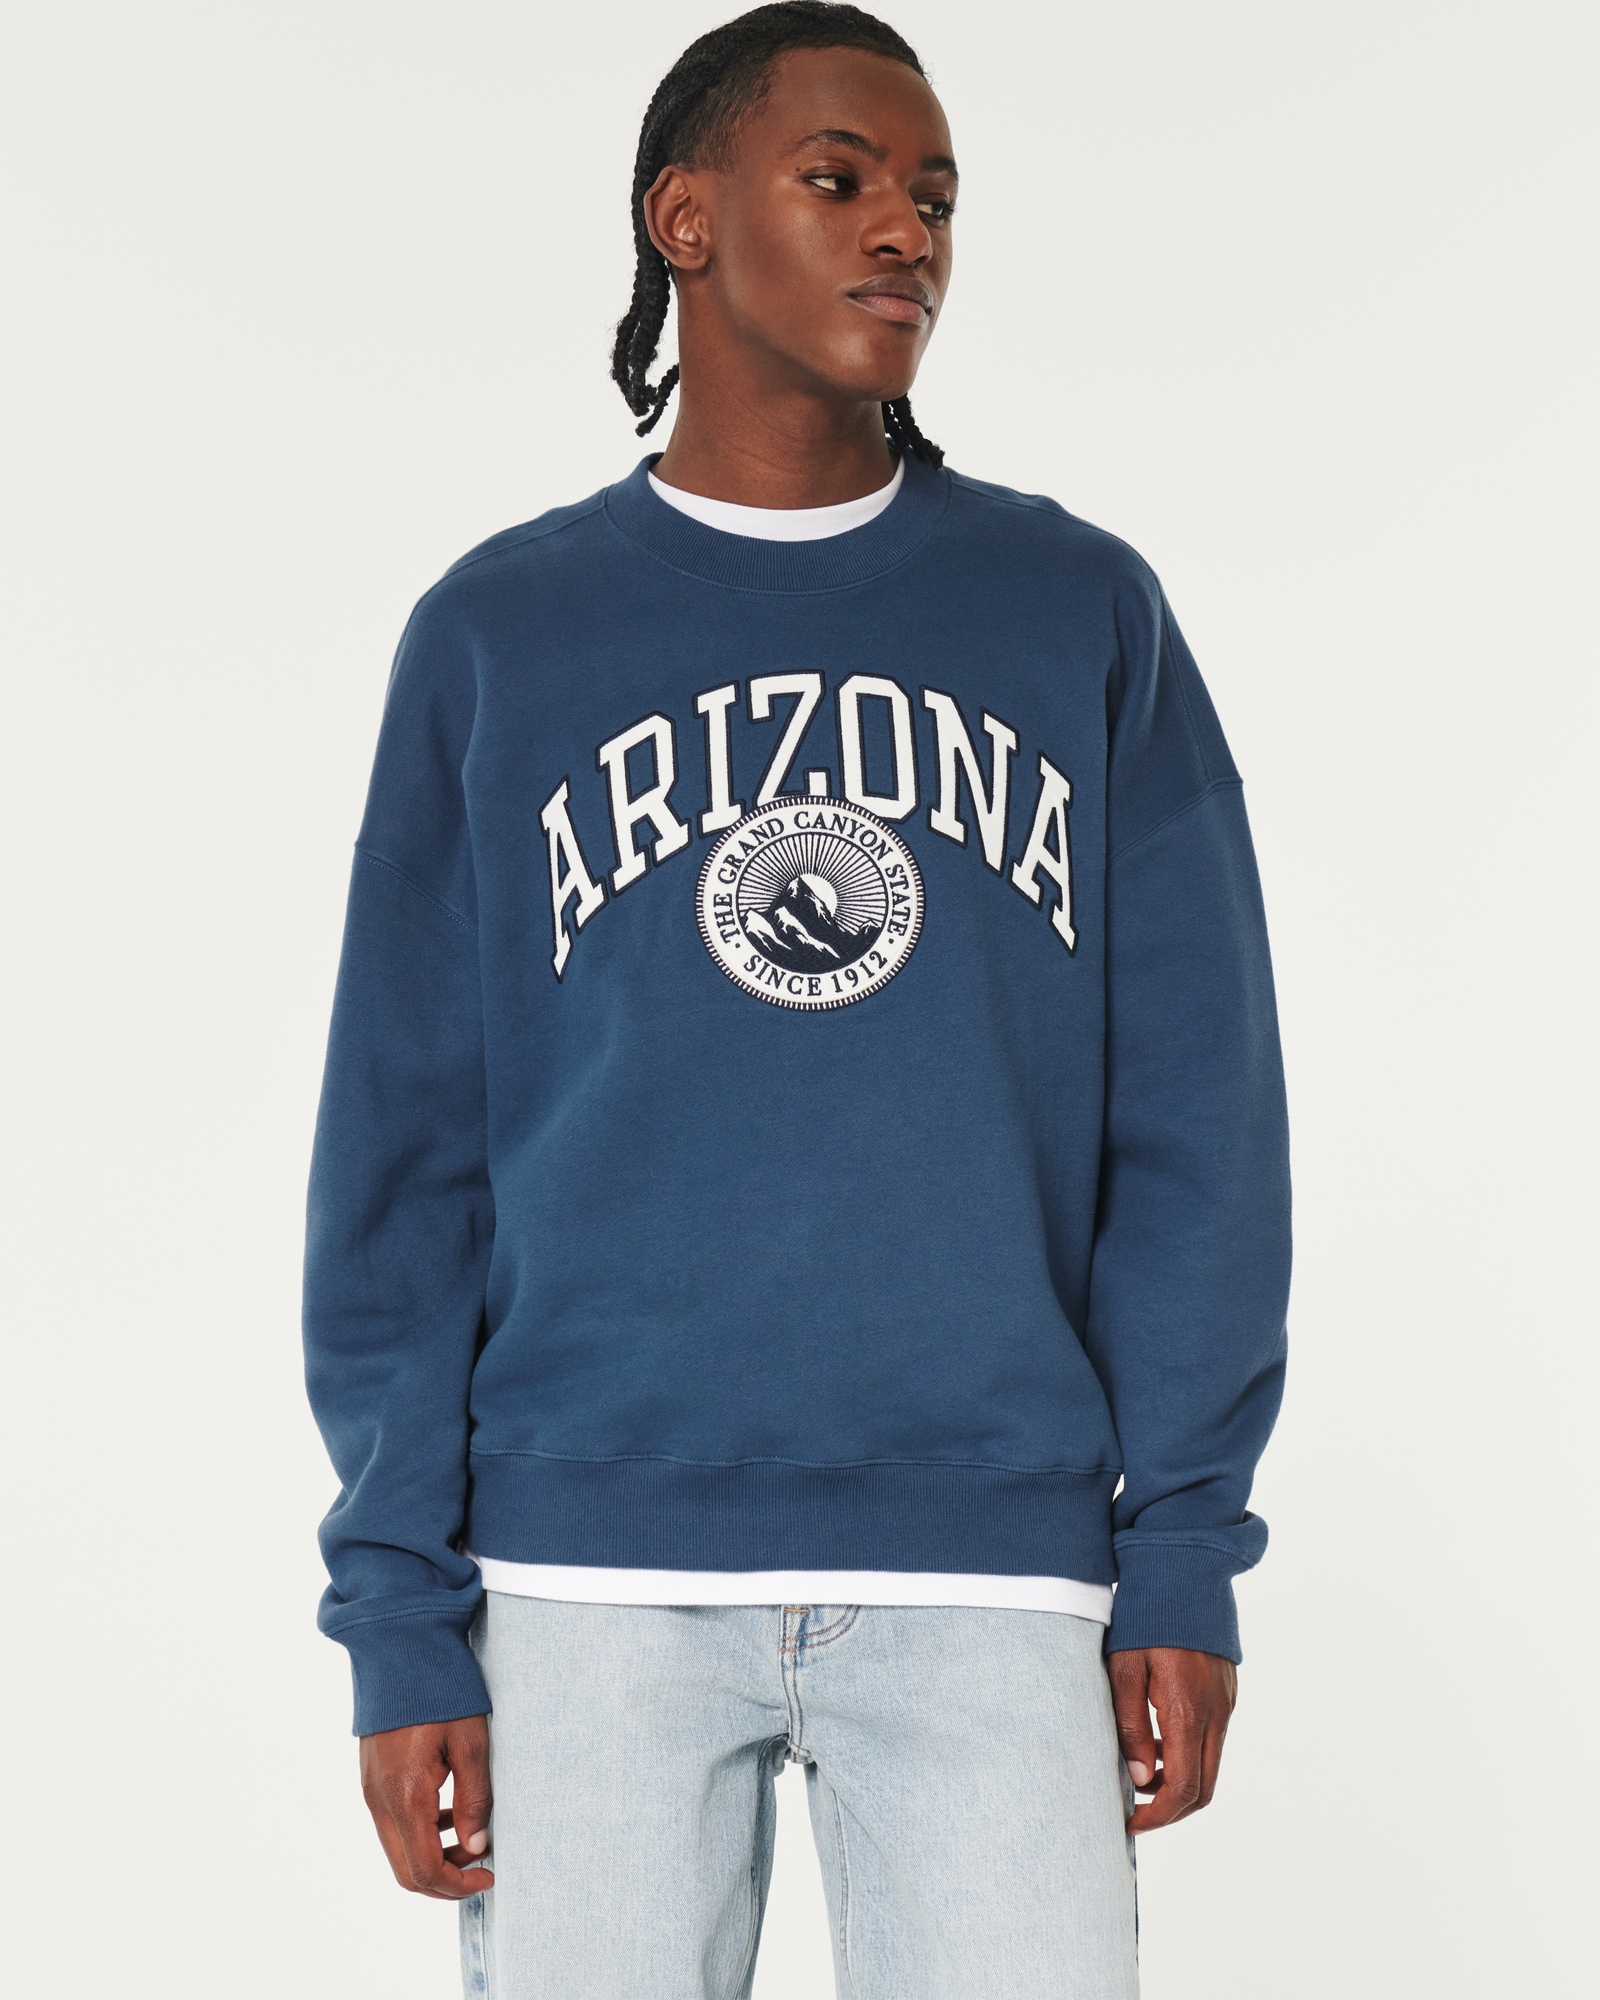 Hollister Grand Canyon Arizona Graphic Crew Sweatshirt